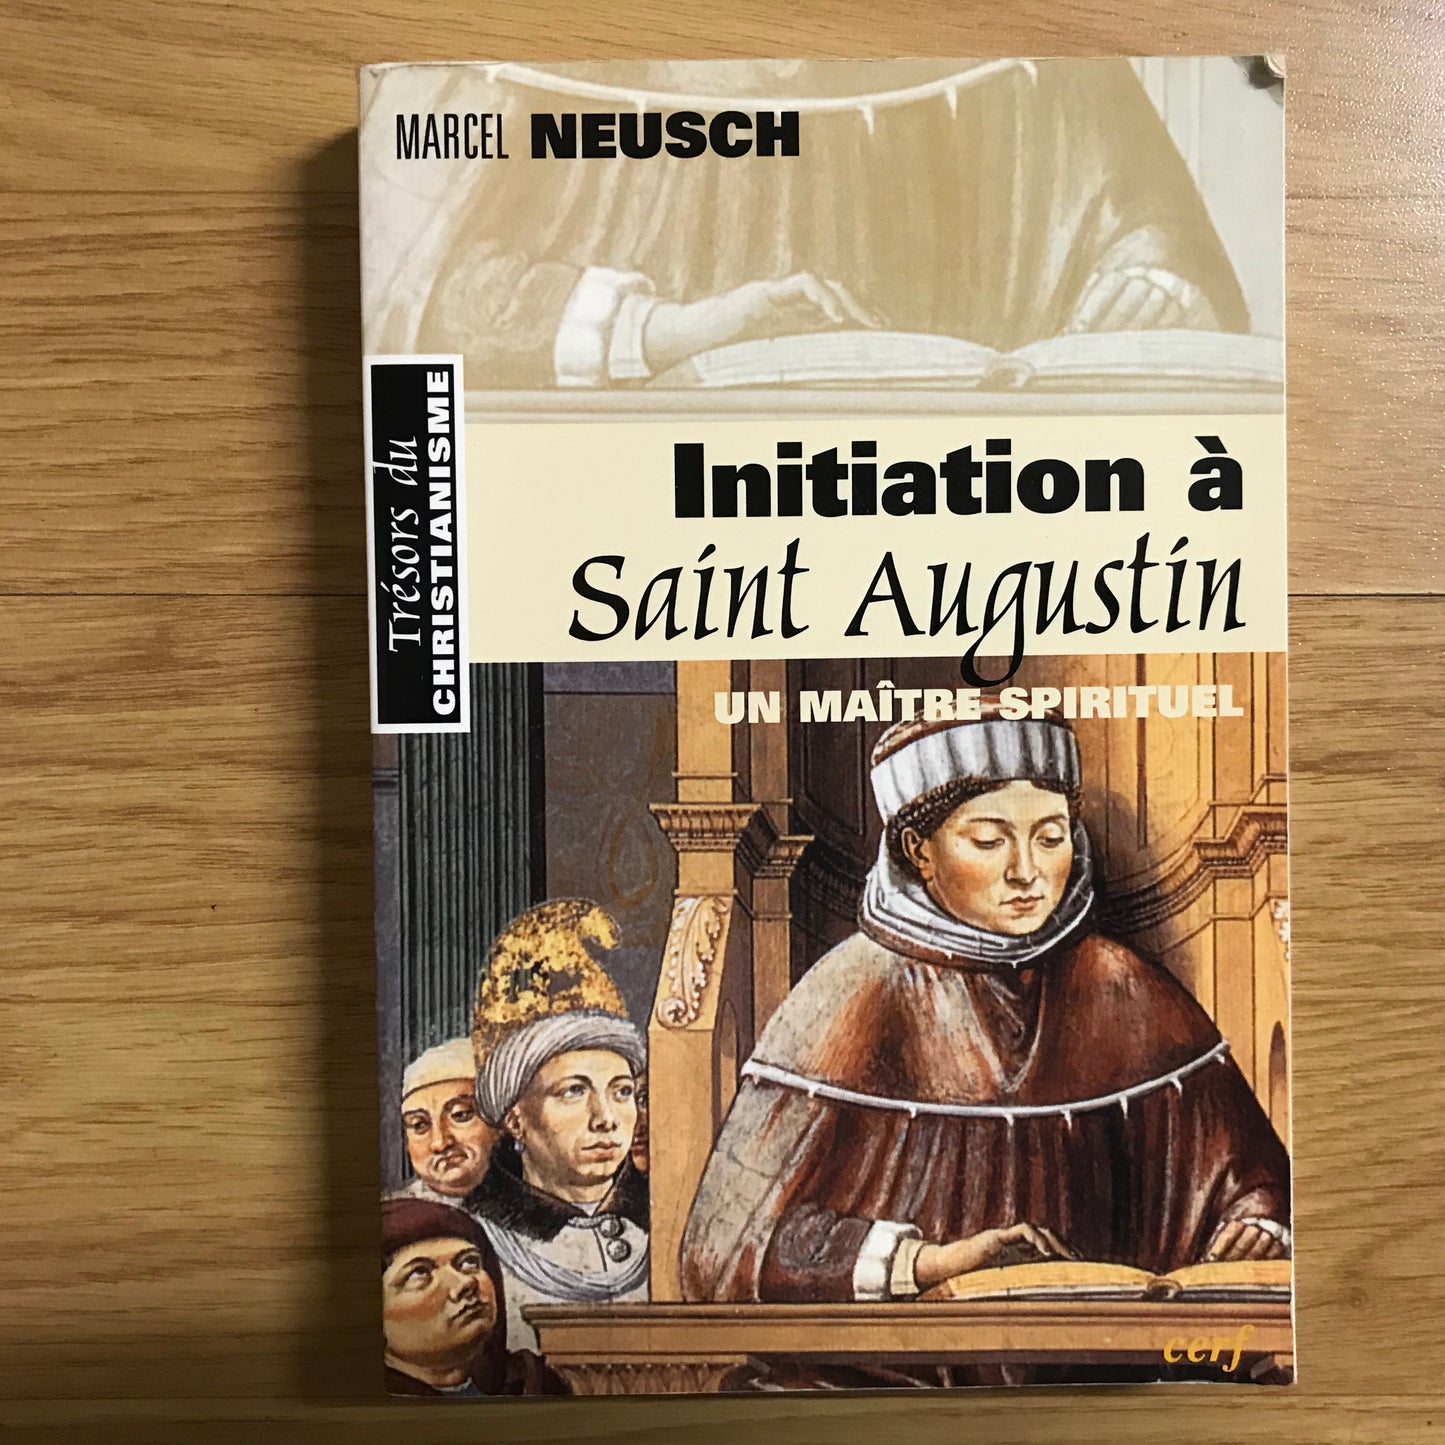 Neusch, Marcel - Initiation à Saint Augustin